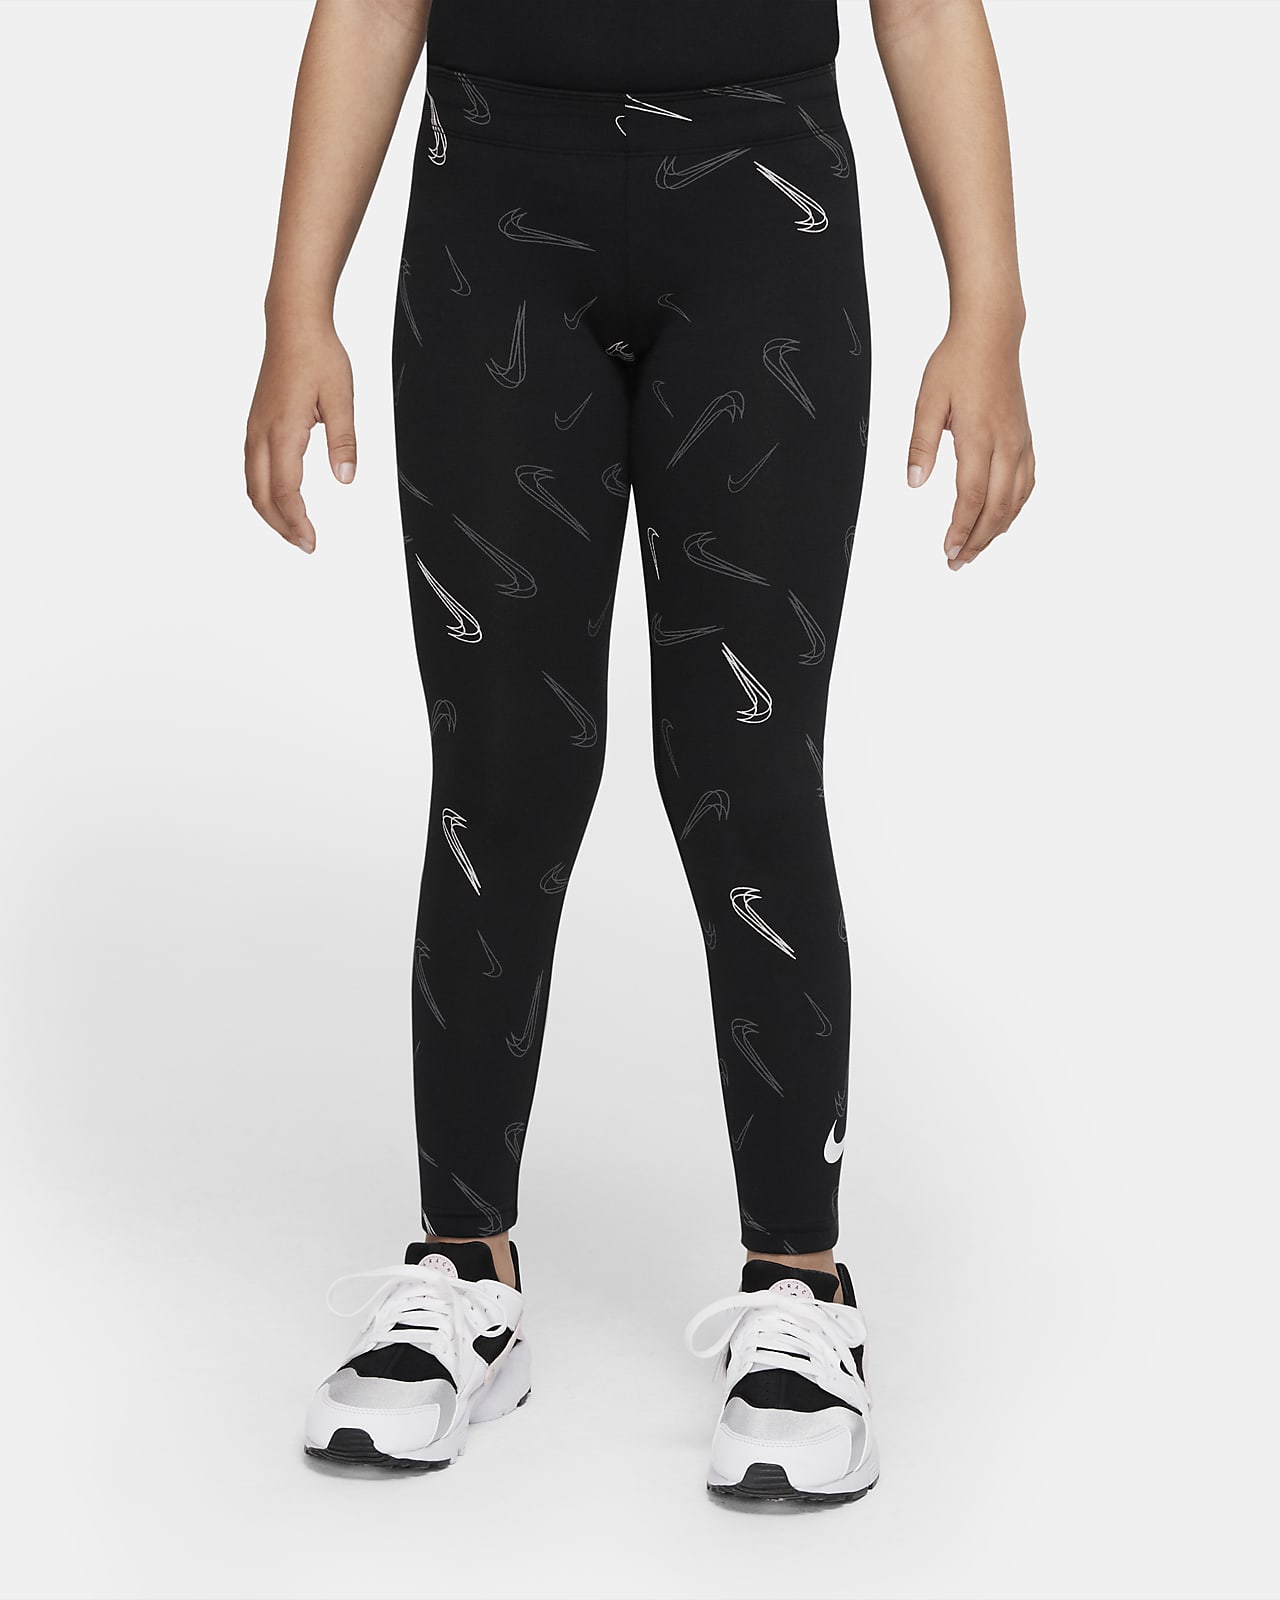 Nike Sportswear Older Kids' (Girls') Printed Dance Leggings